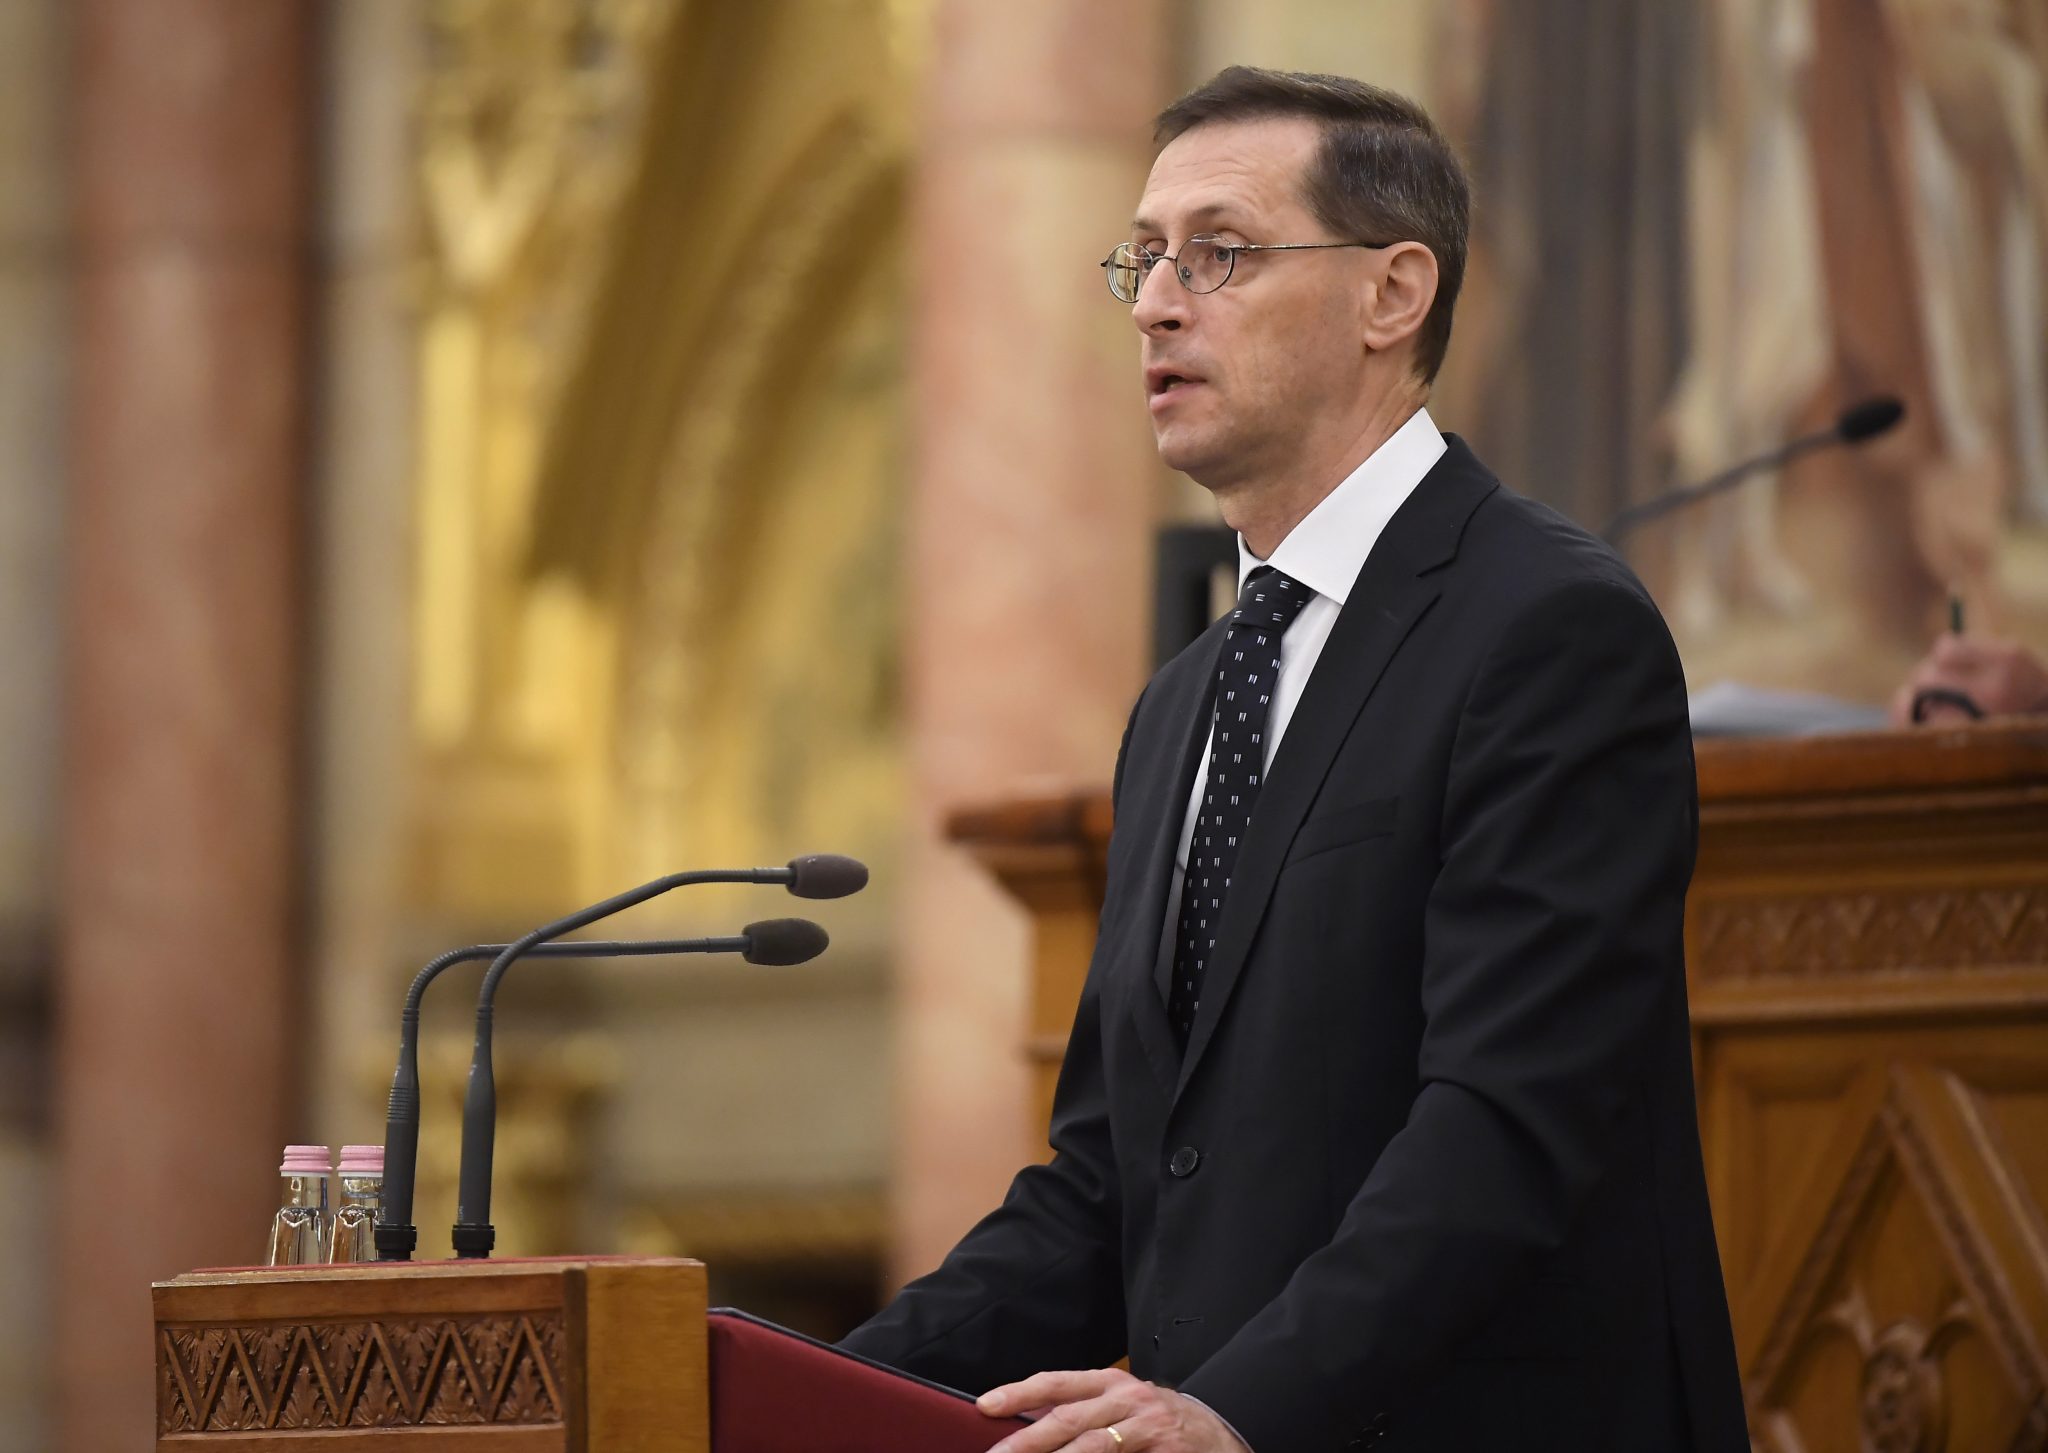 Hungary joins global minimum corporate tax agreement